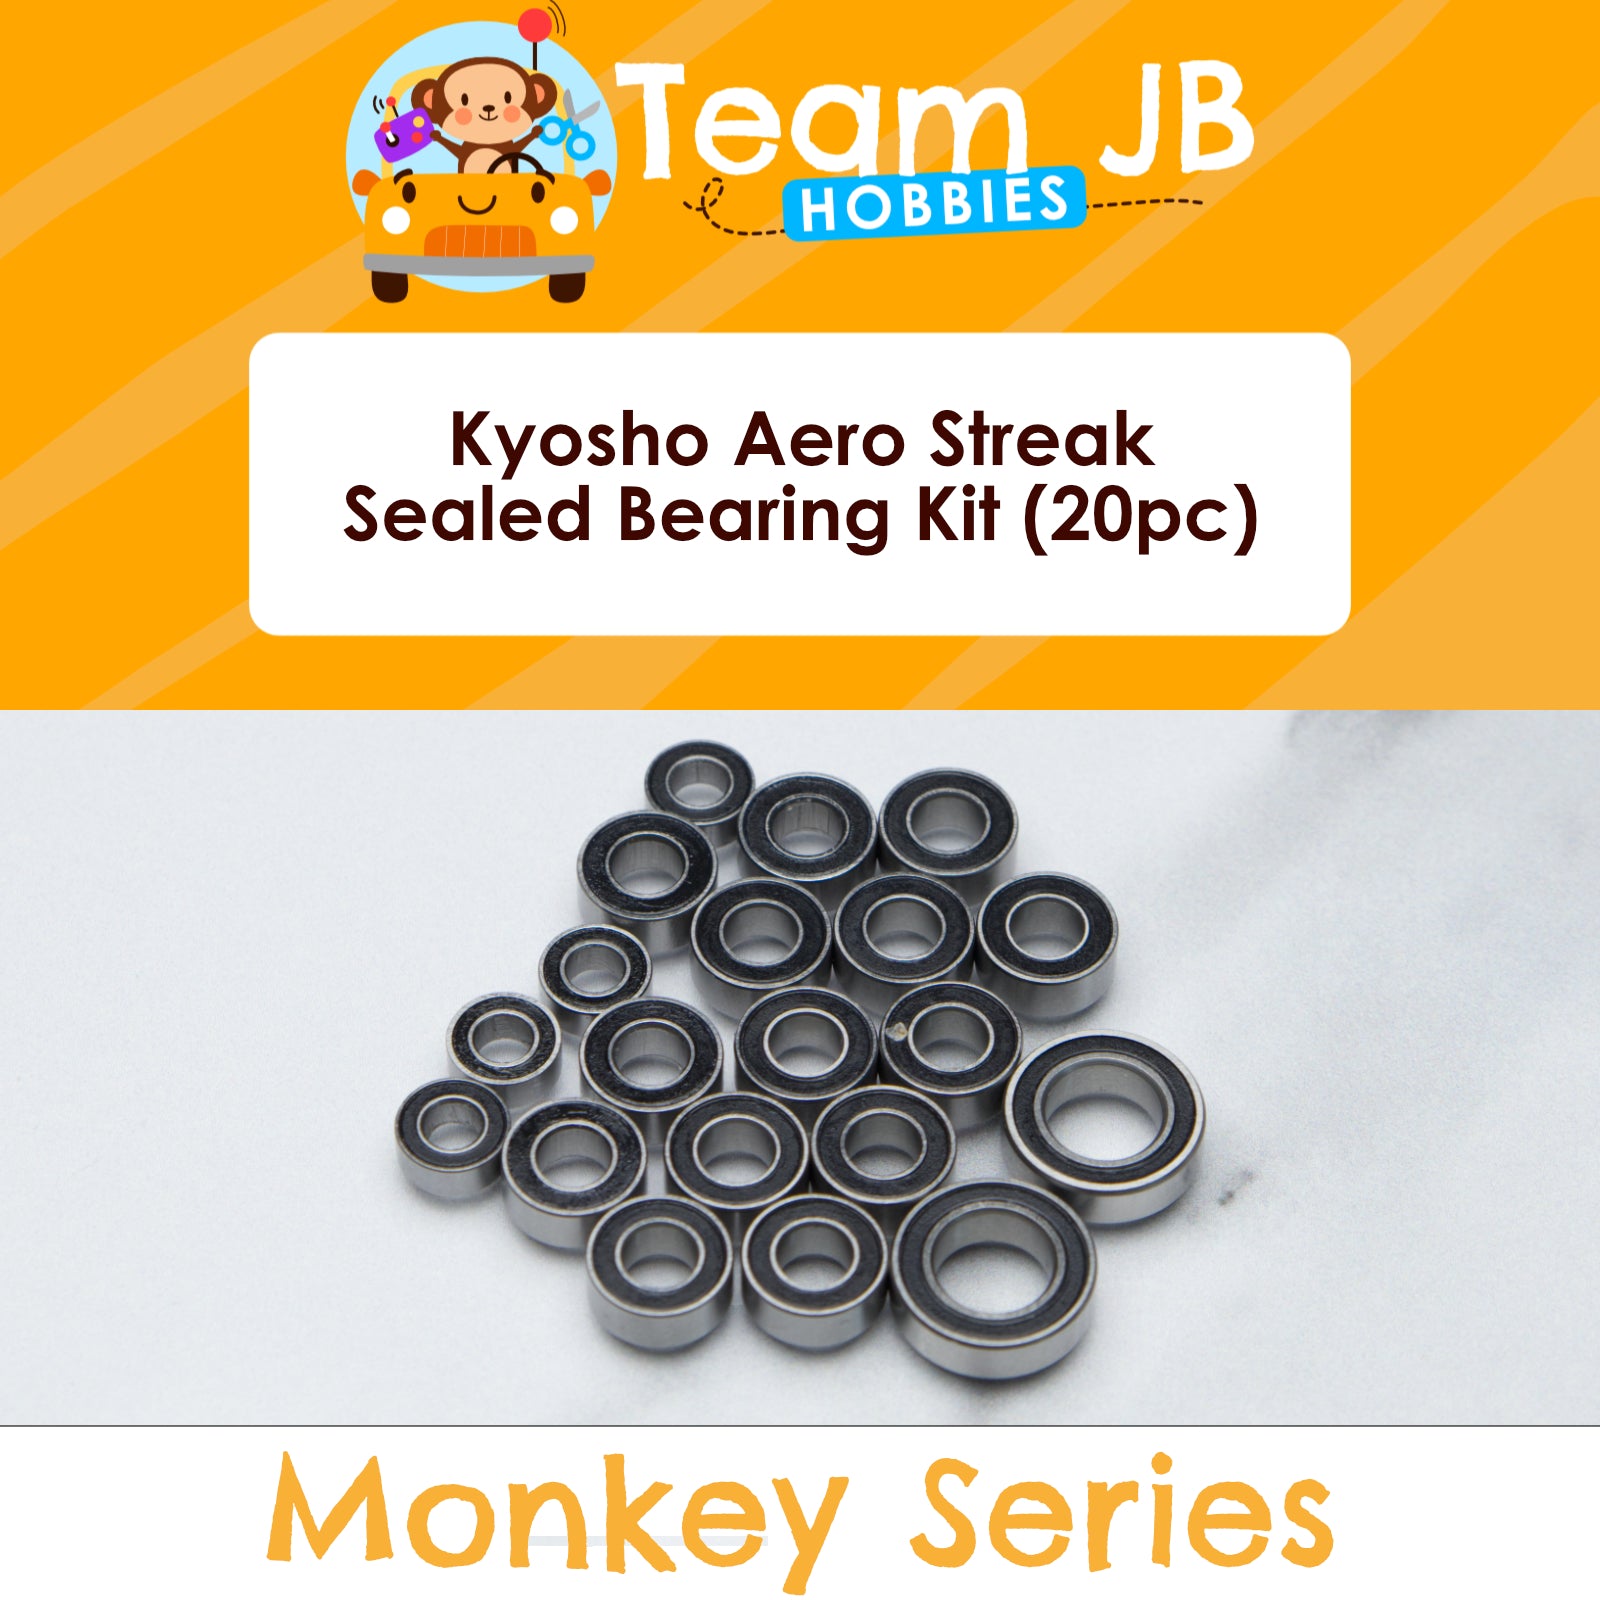 Kyosho Aero Streak - Sealed Bearing Kit